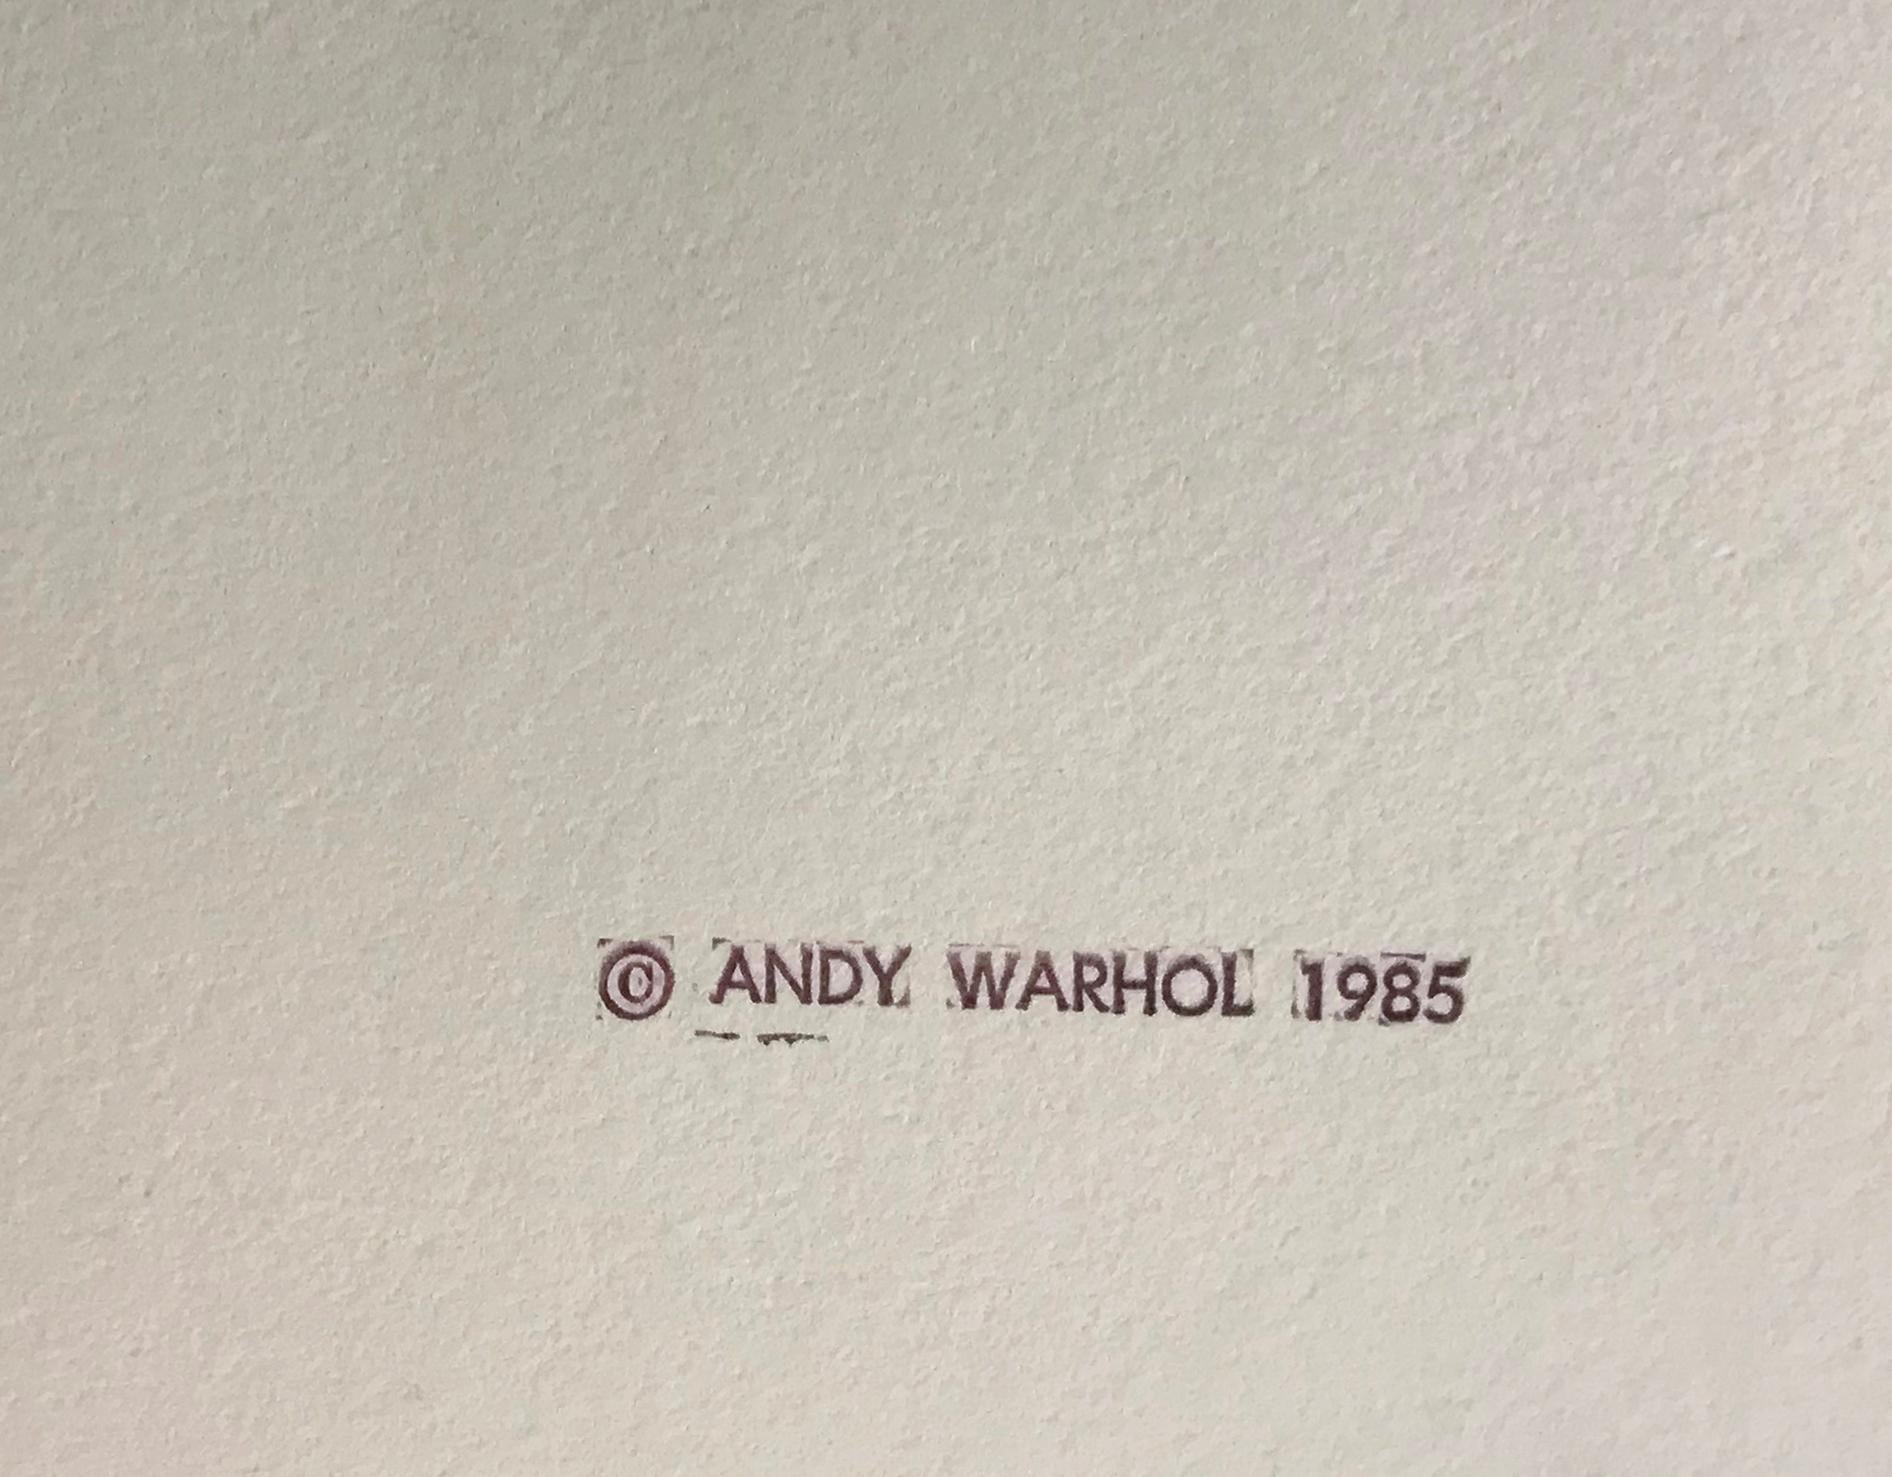 QUEEN MARGRETHE II OF DENMARK FS II.344 - Print by Andy Warhol